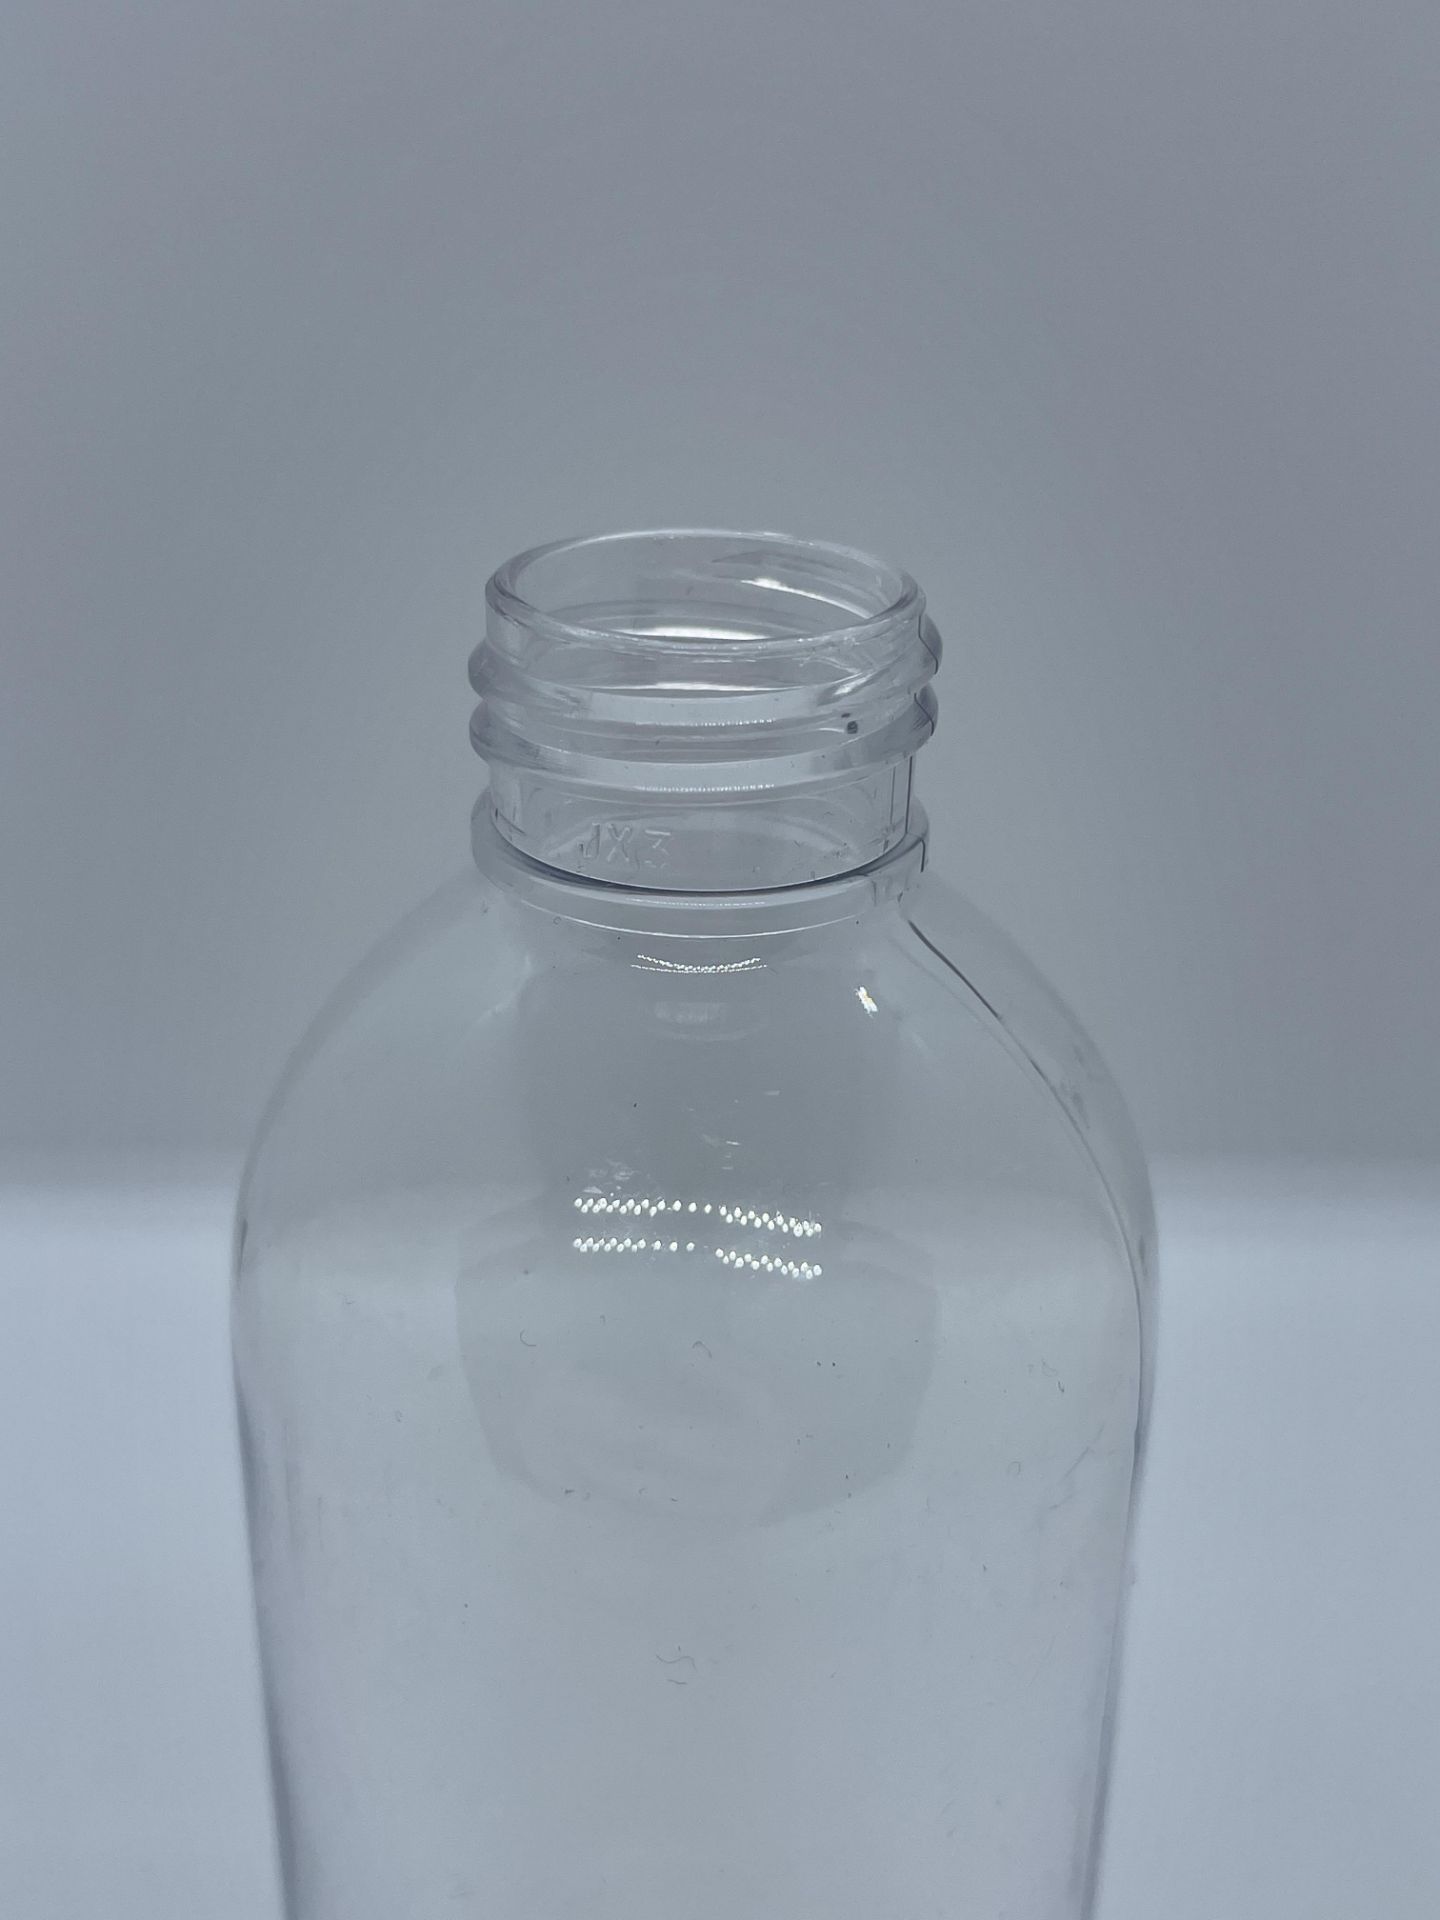 75,000 - Clear Plastic Bullet 8 oz Empty Bottles, 24-410 Threading Neck, 6.25" Tall, 2" Diameter - Image 4 of 5